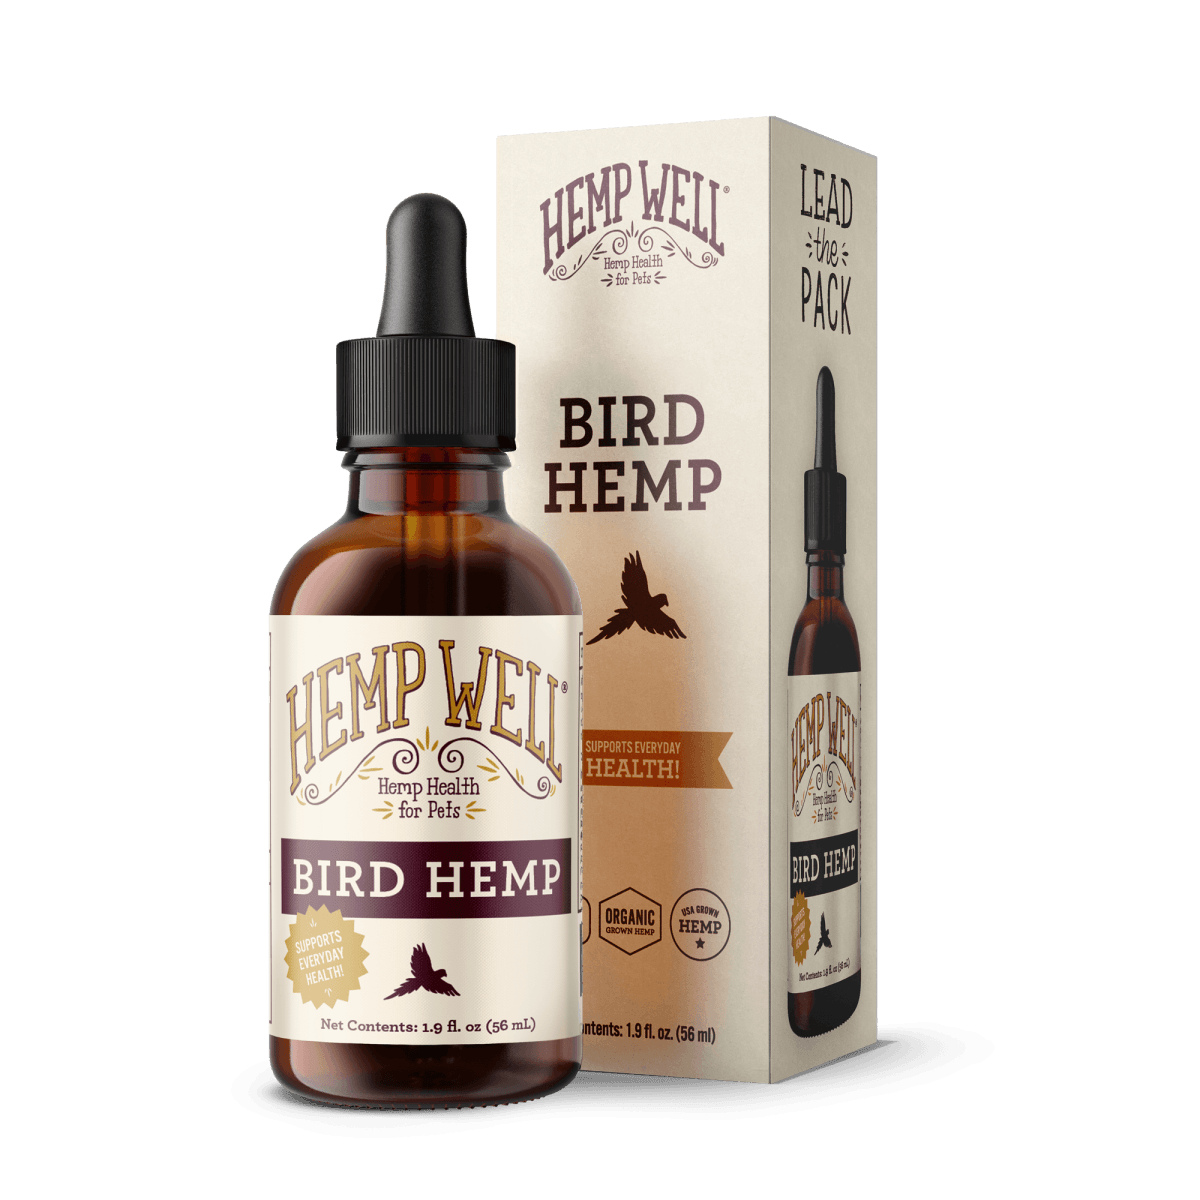 Bird Hemp Oil - Hemp Well